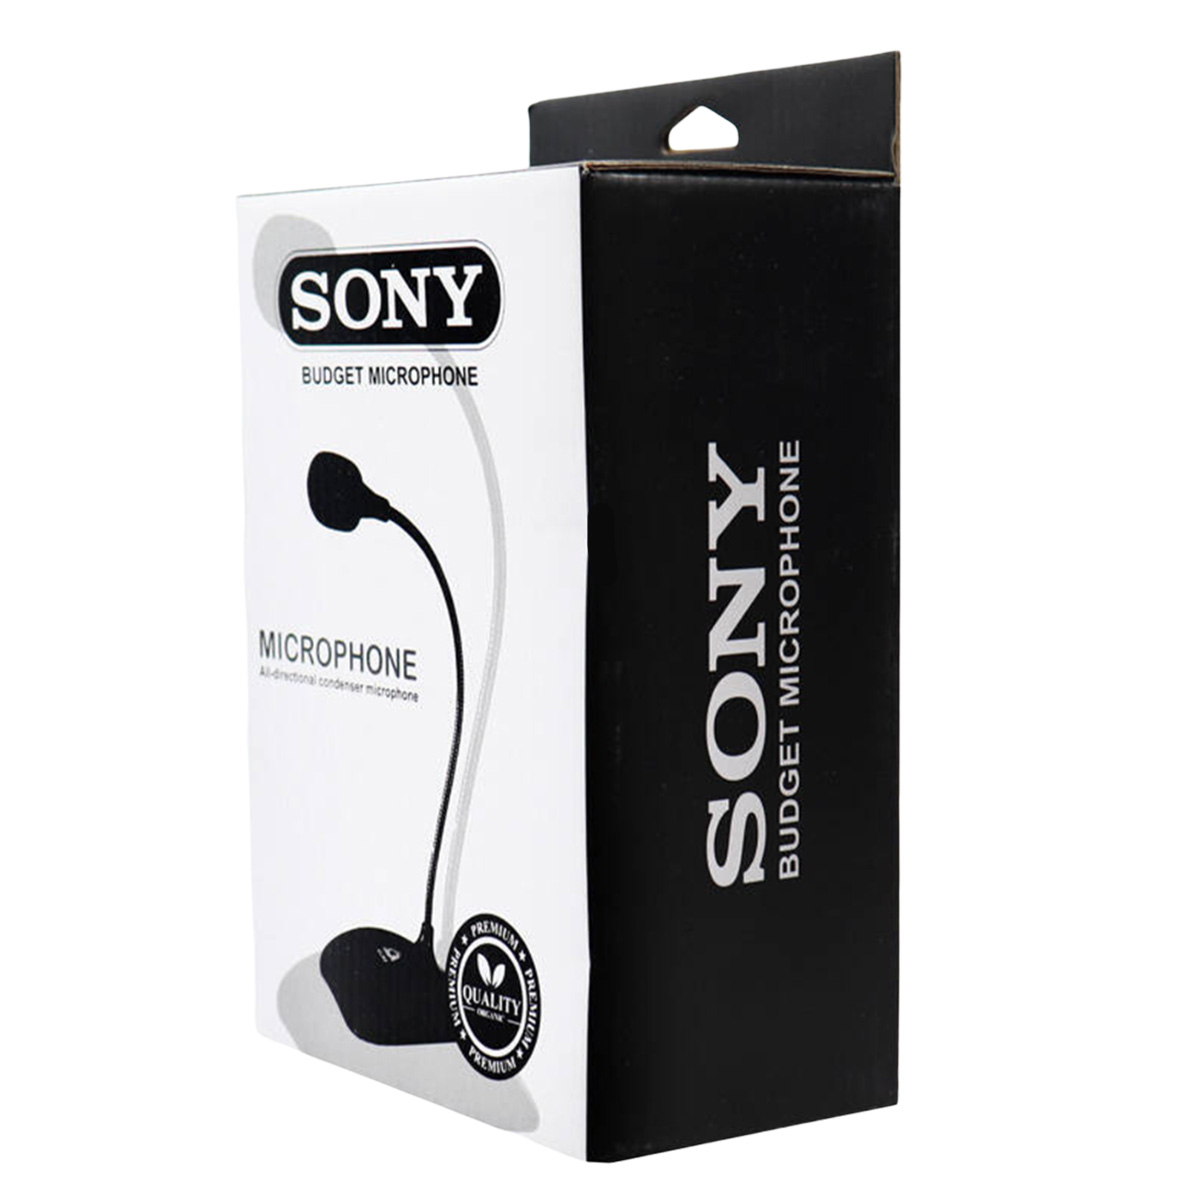 میکروفون رومیزی Sony Budget Microphone